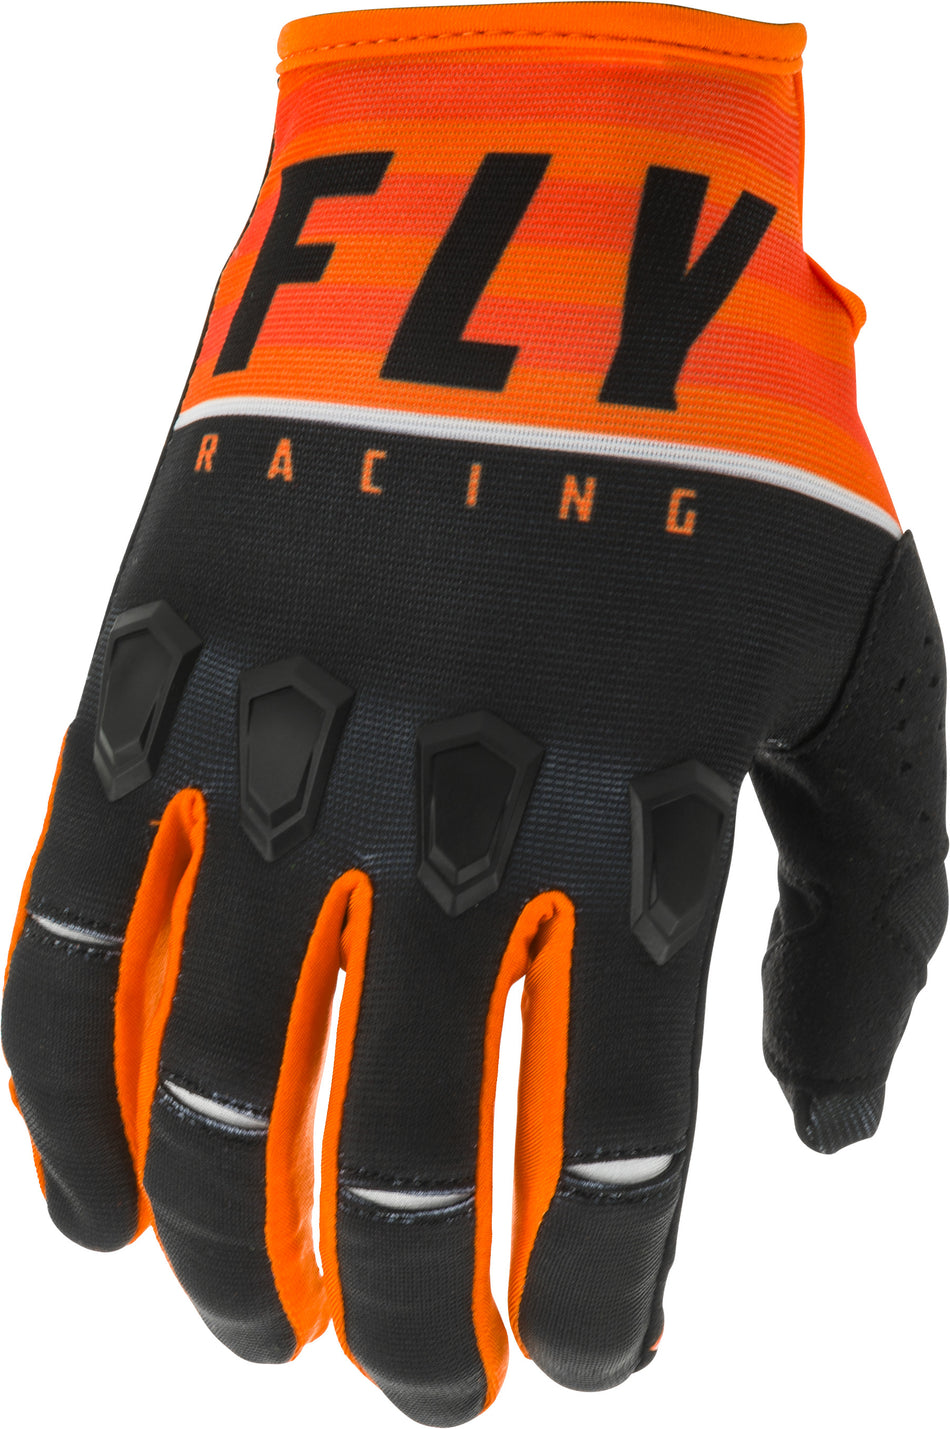 FLY RACING Kinetic K120 Gloves Orange/Black/White Sz 05 373-41705